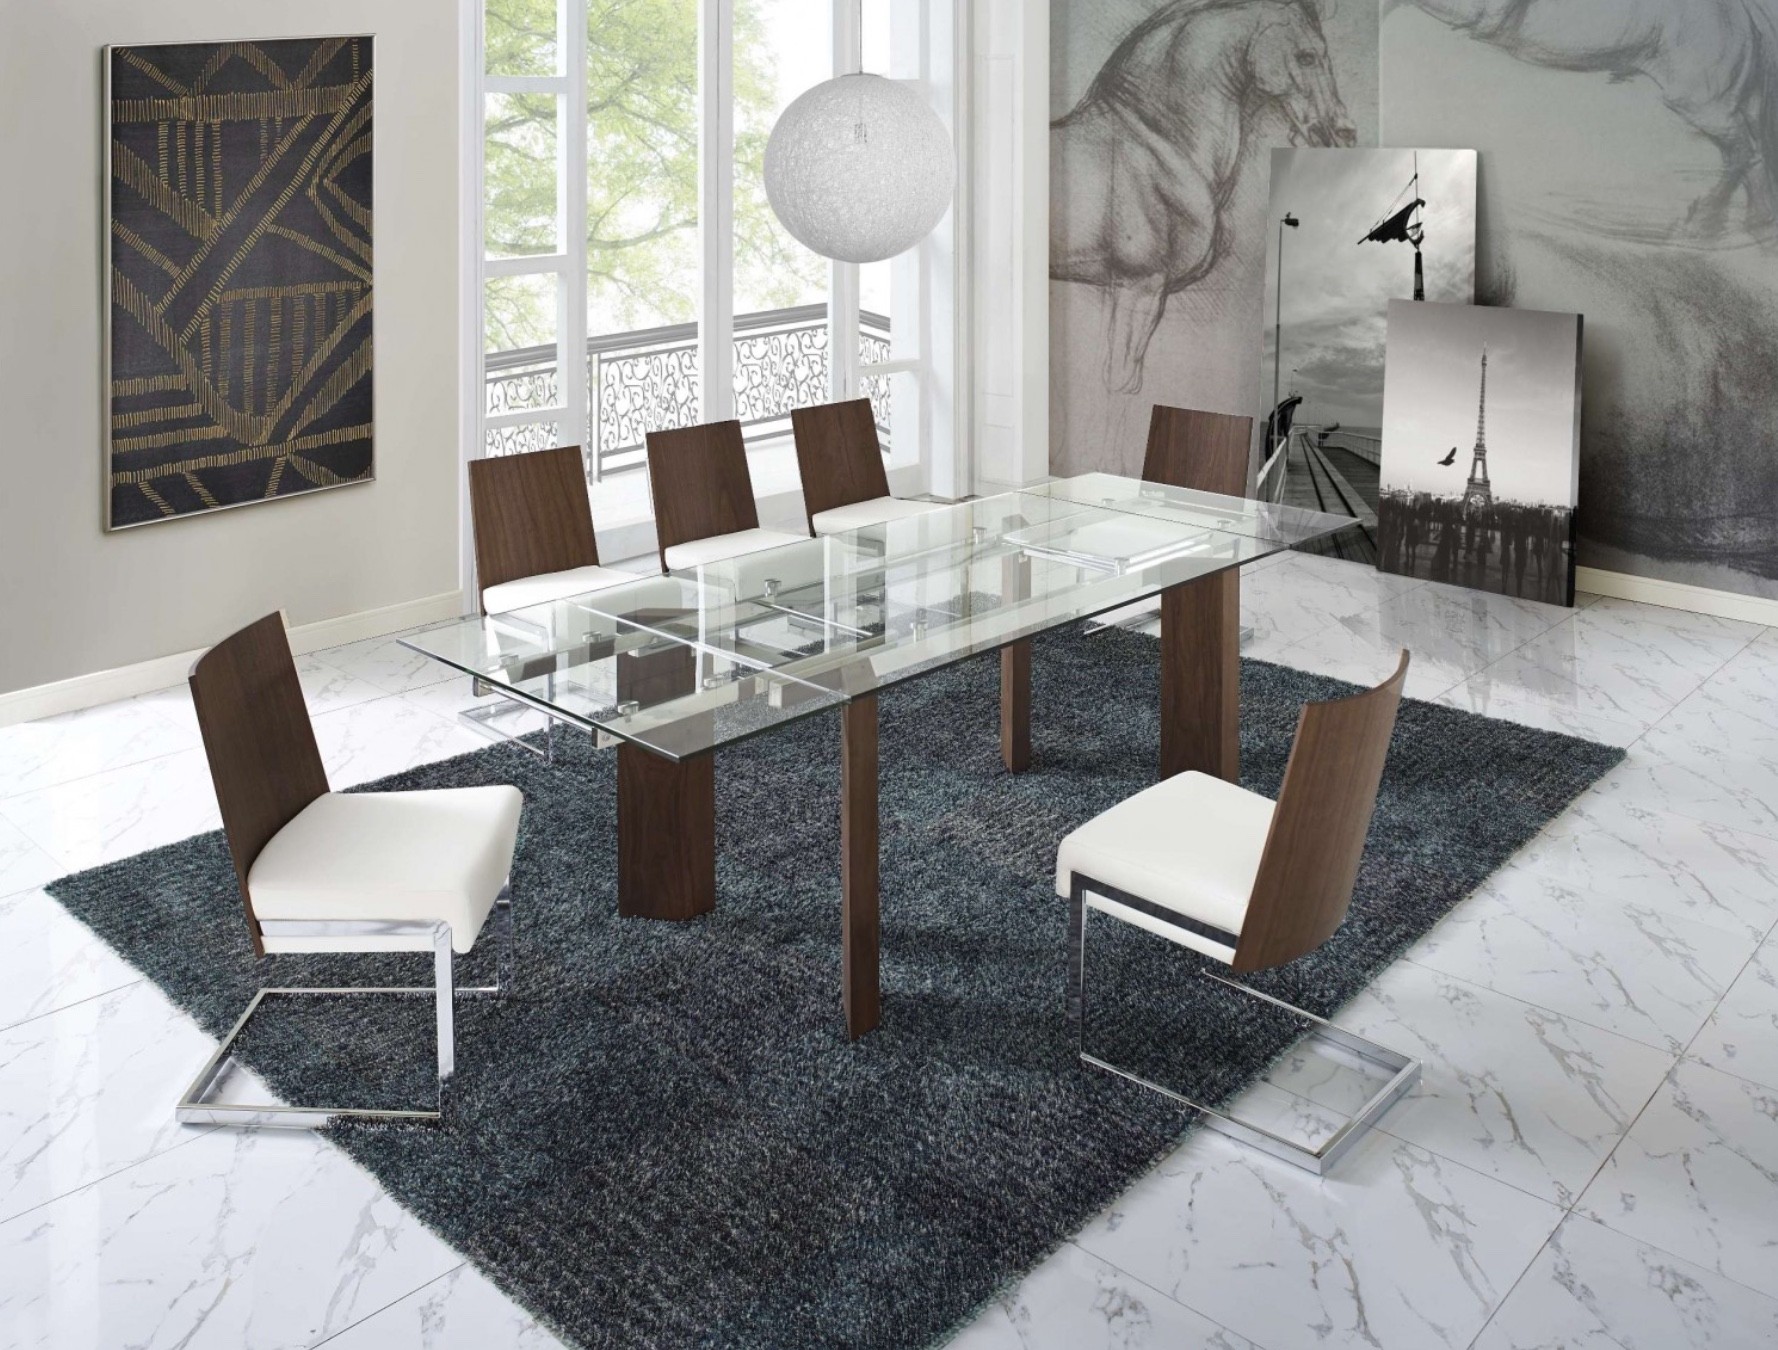 Royce table by Creative, Creative Furniture USA, Creative Dining room